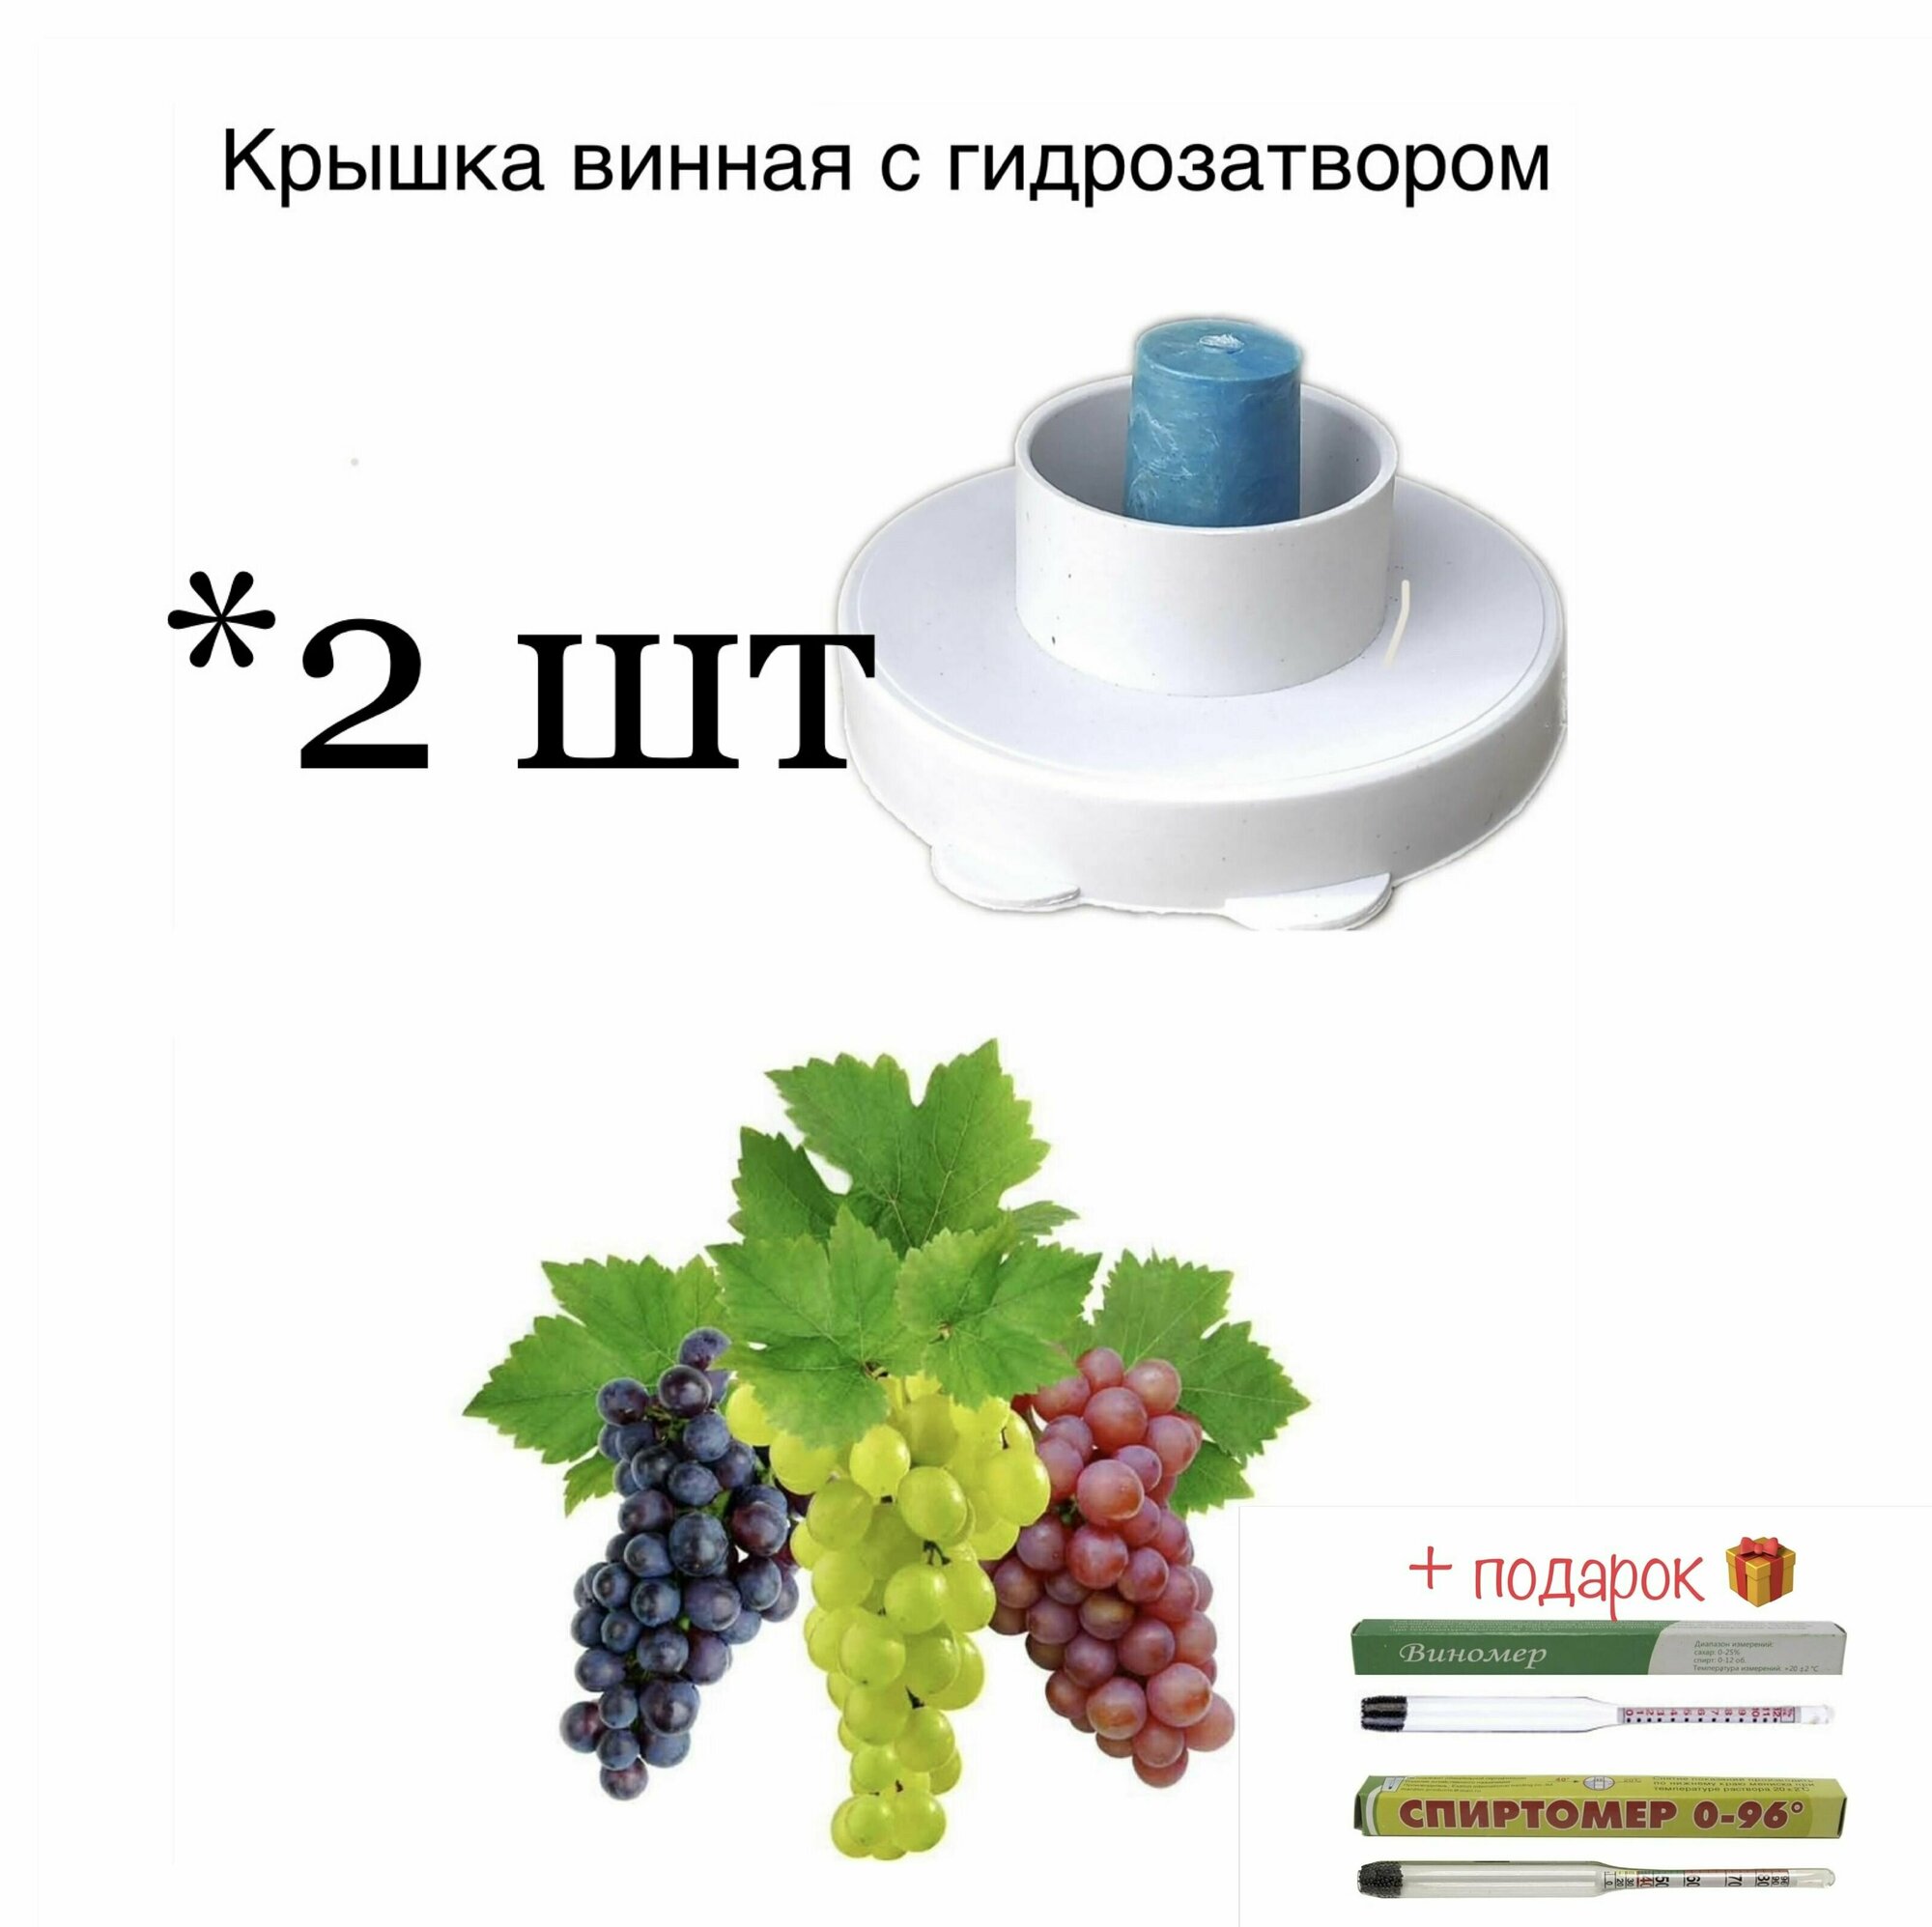 Крышка на баллон винная с гидрозатвором (2 шт)+подарок набор АСП (виномер и спиртомер)